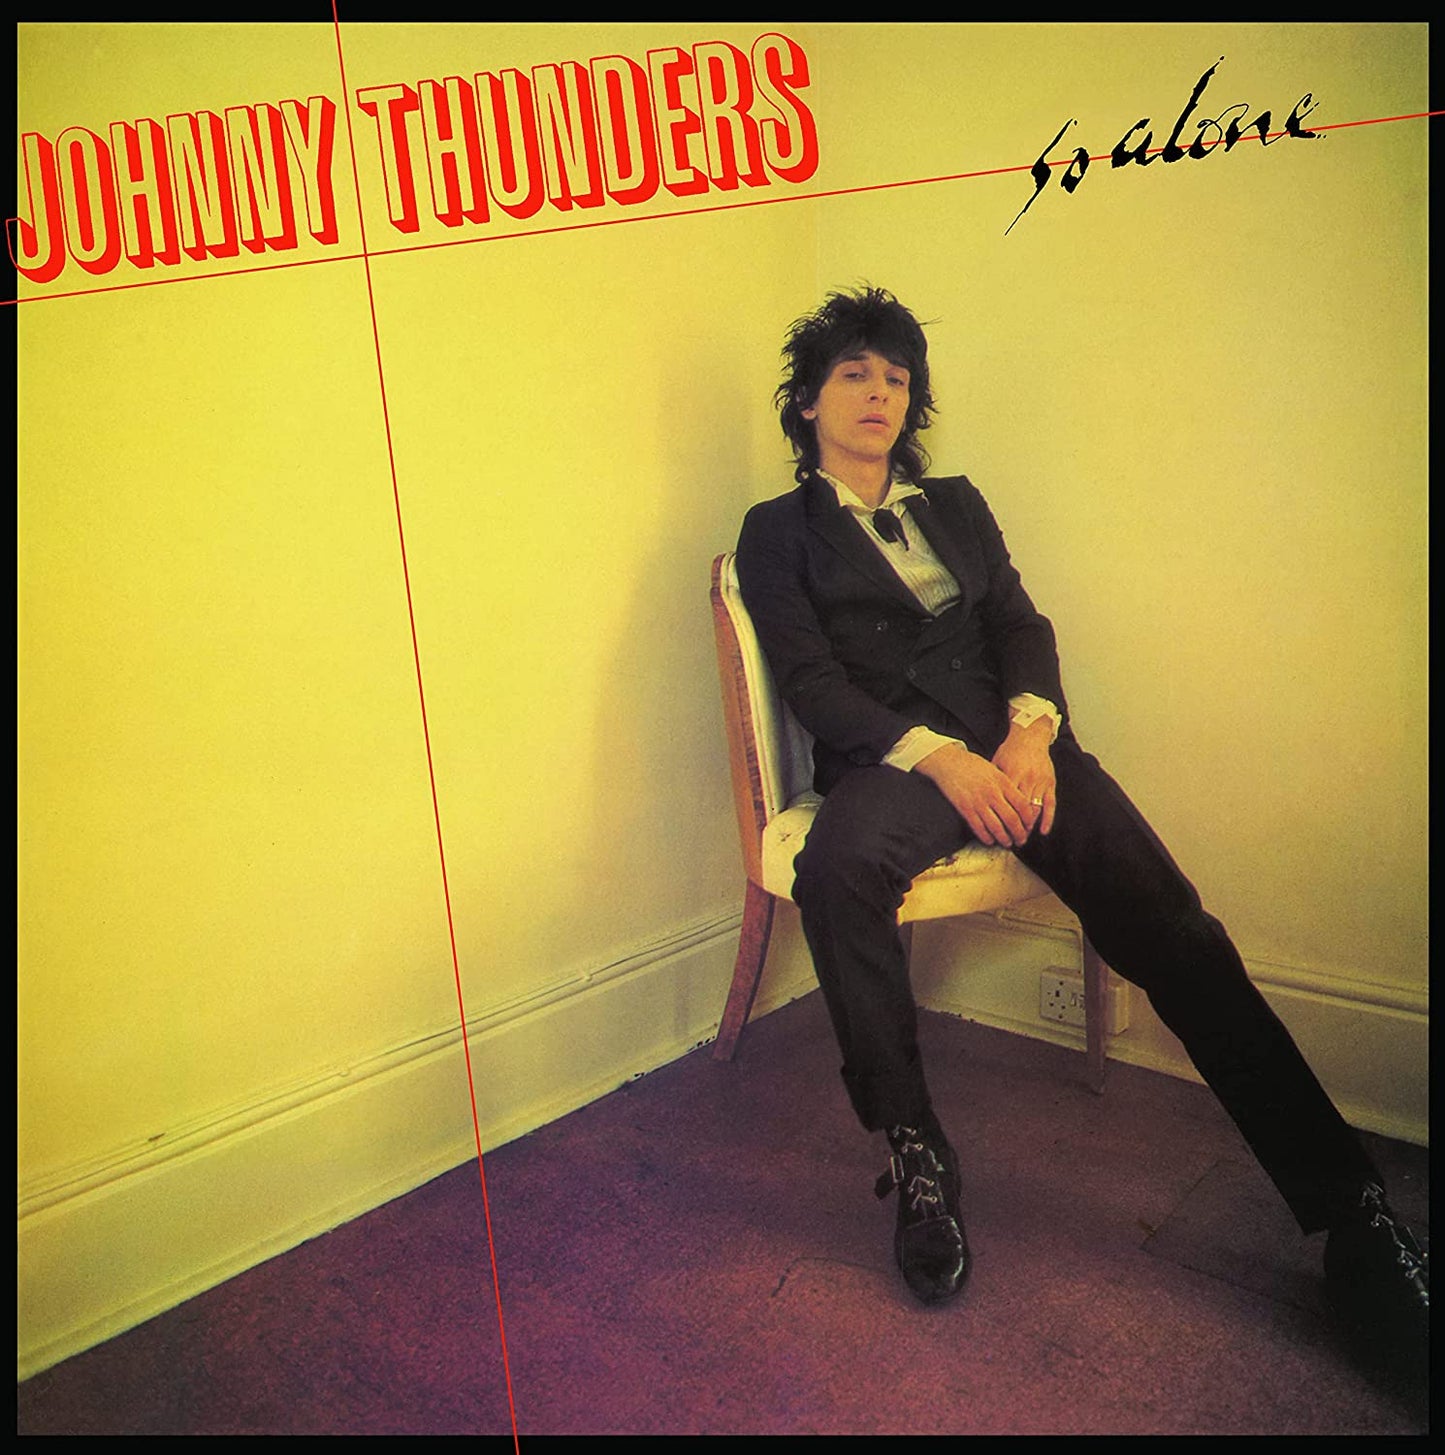 Johnny Thunders - So Alone - LP